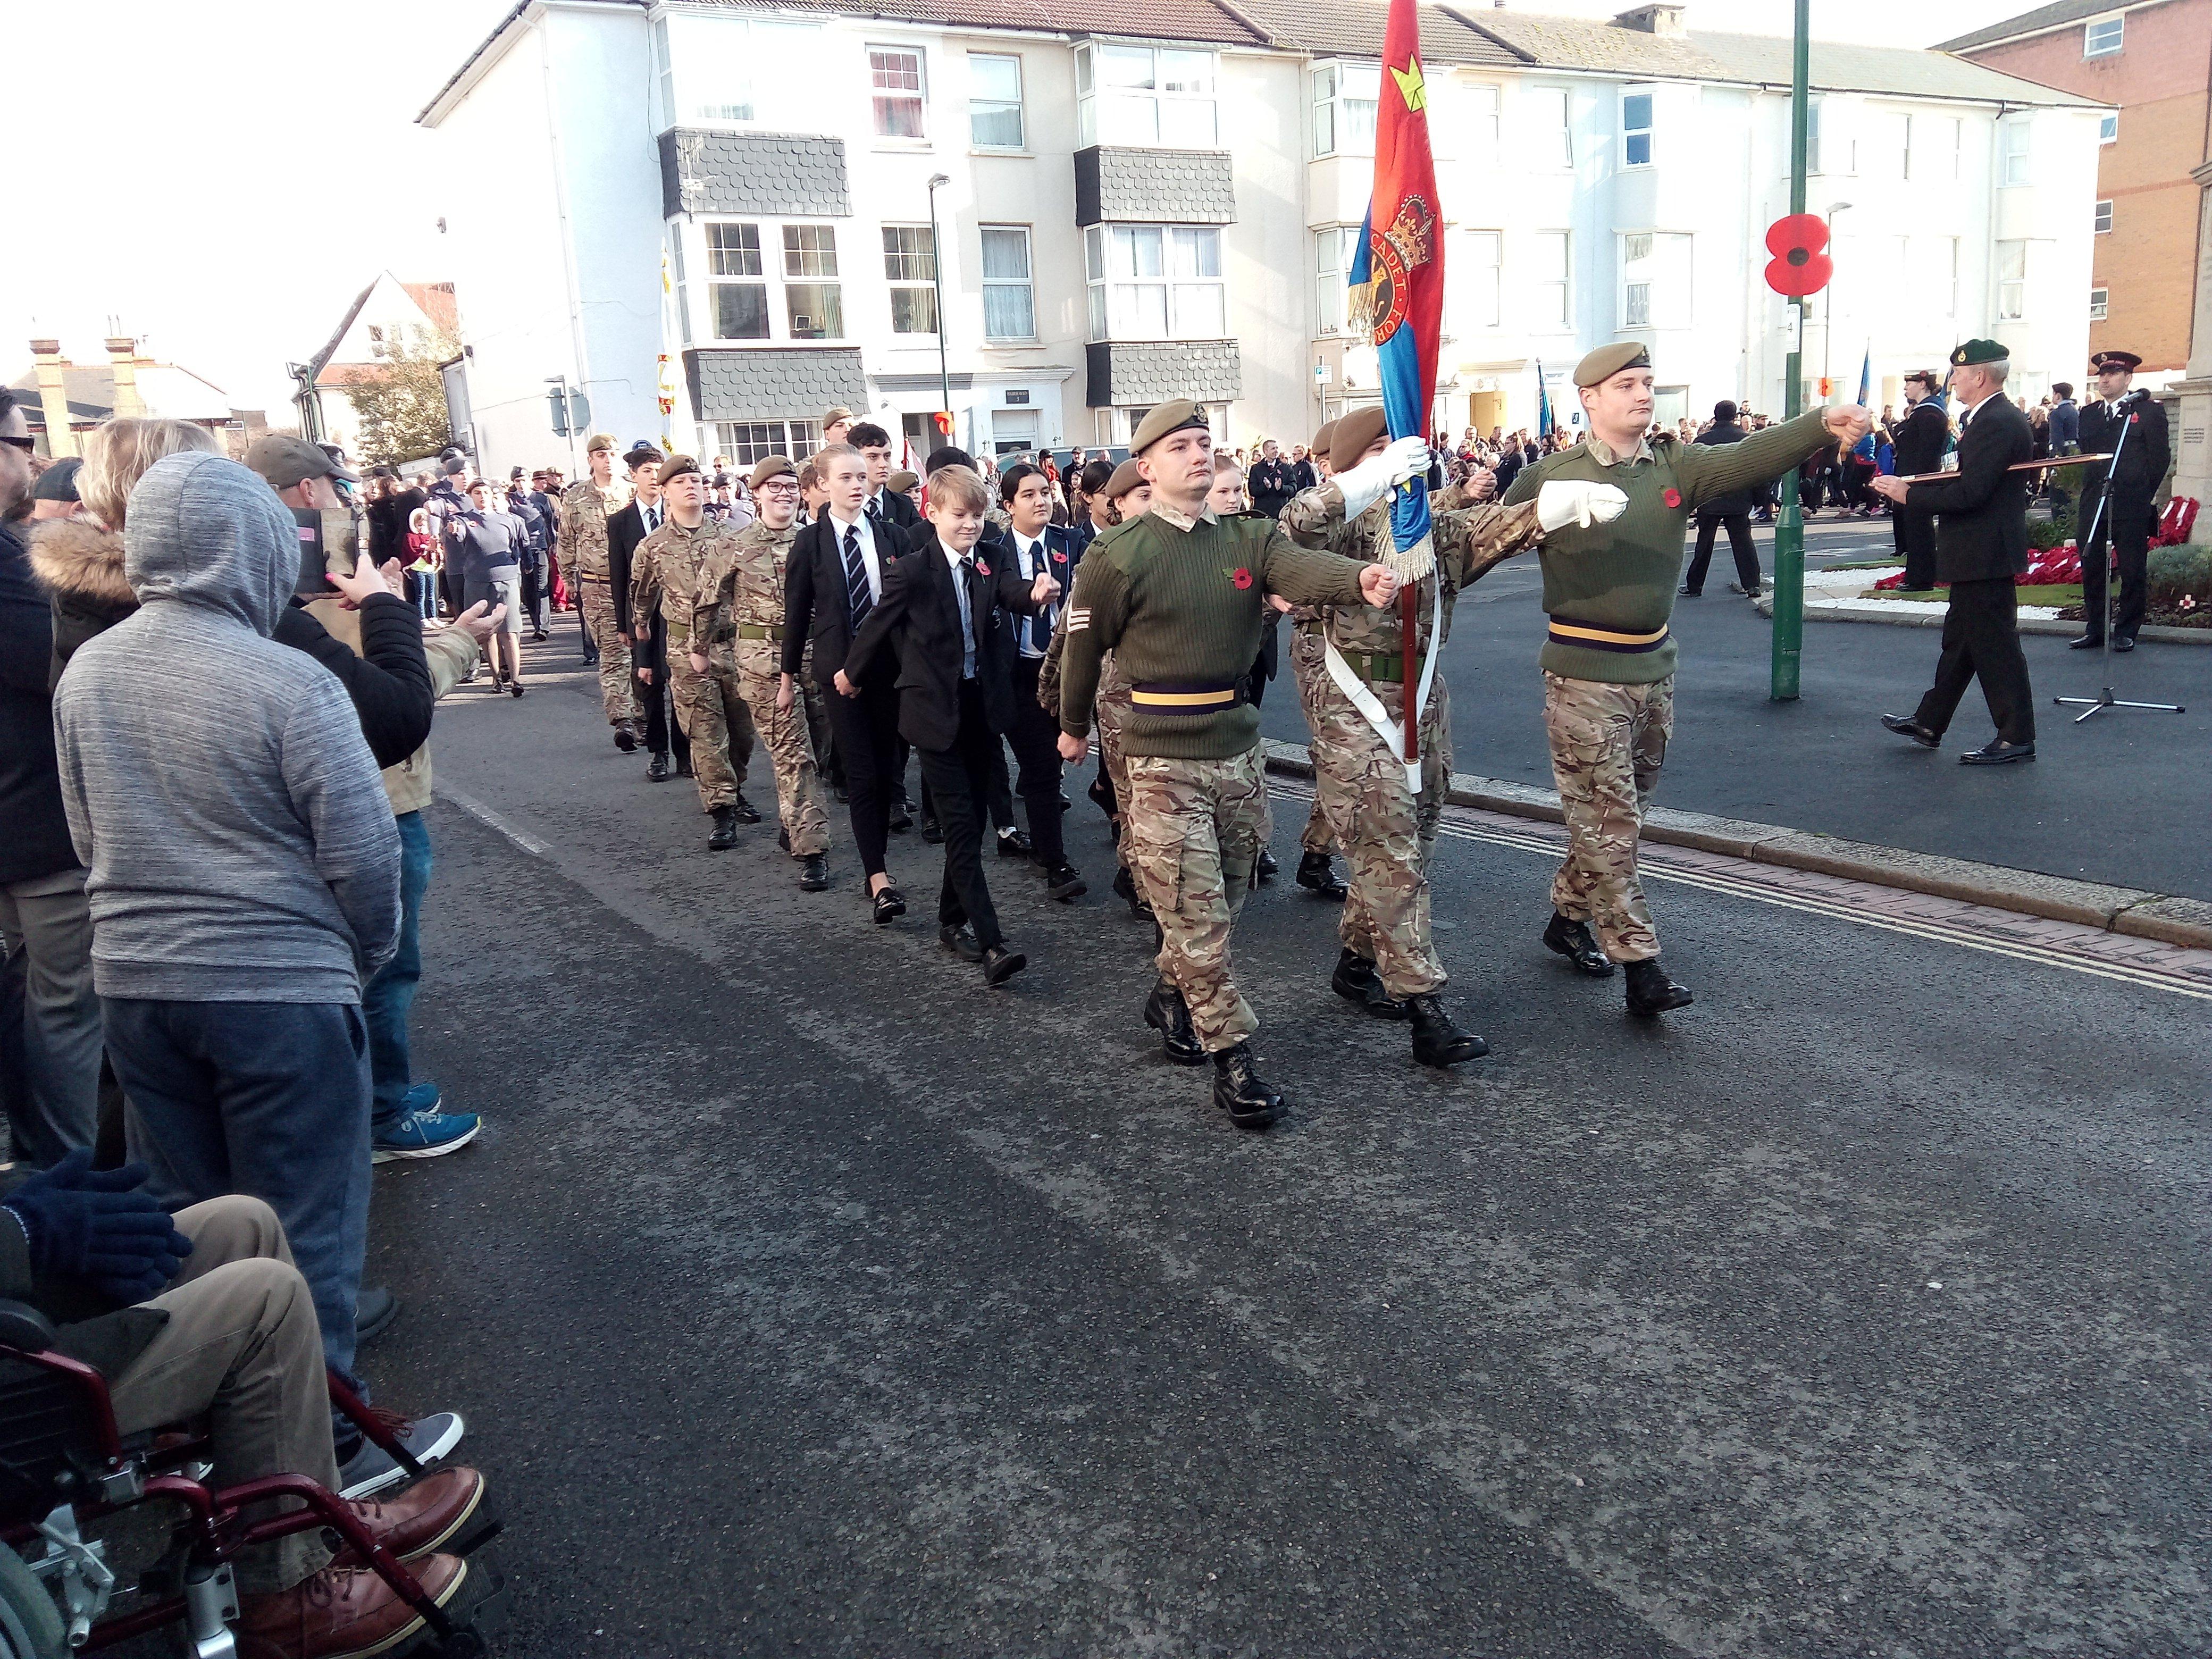 17 Bognor Regis detachment on parade